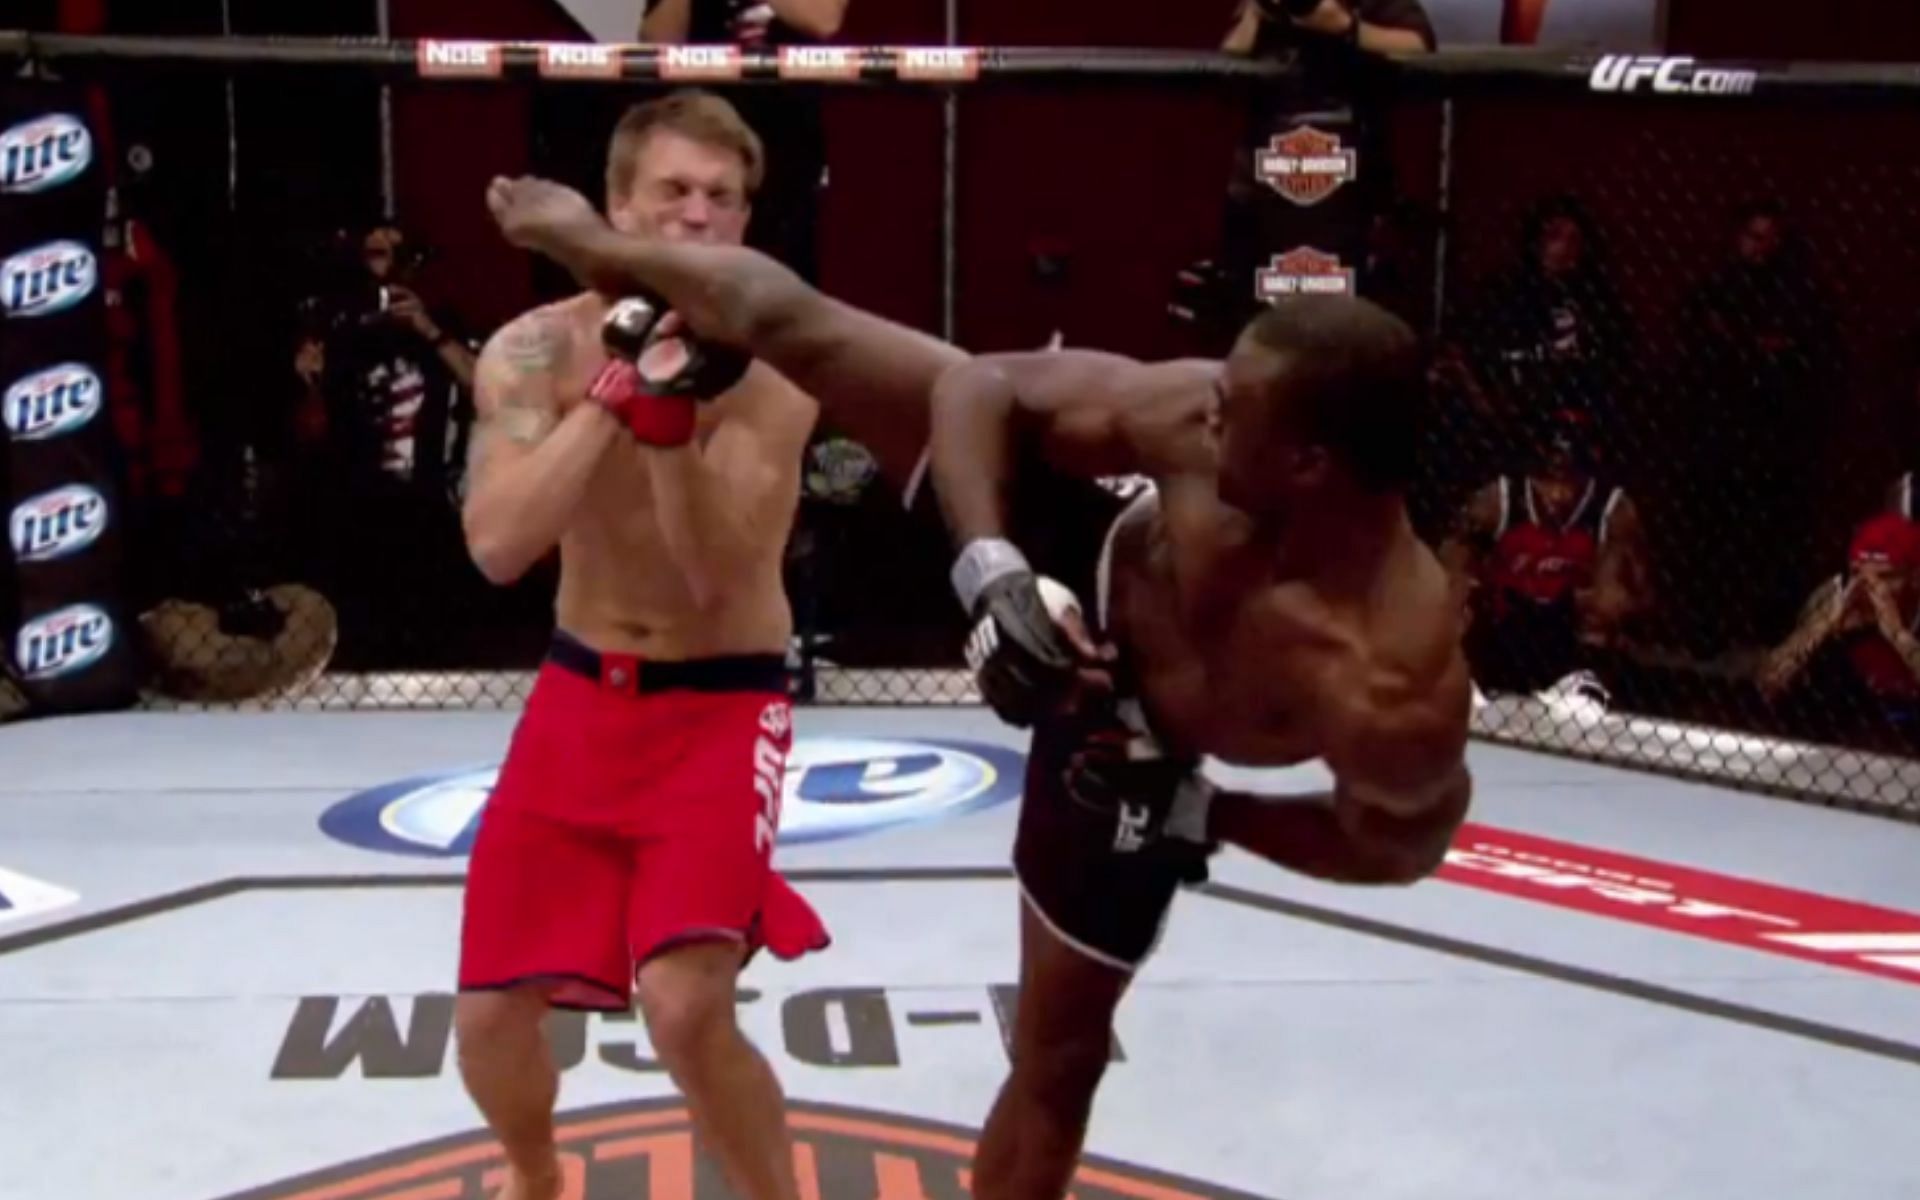 Photo credit: UFC / FX - Uriah Hall knocks out Adam Cella